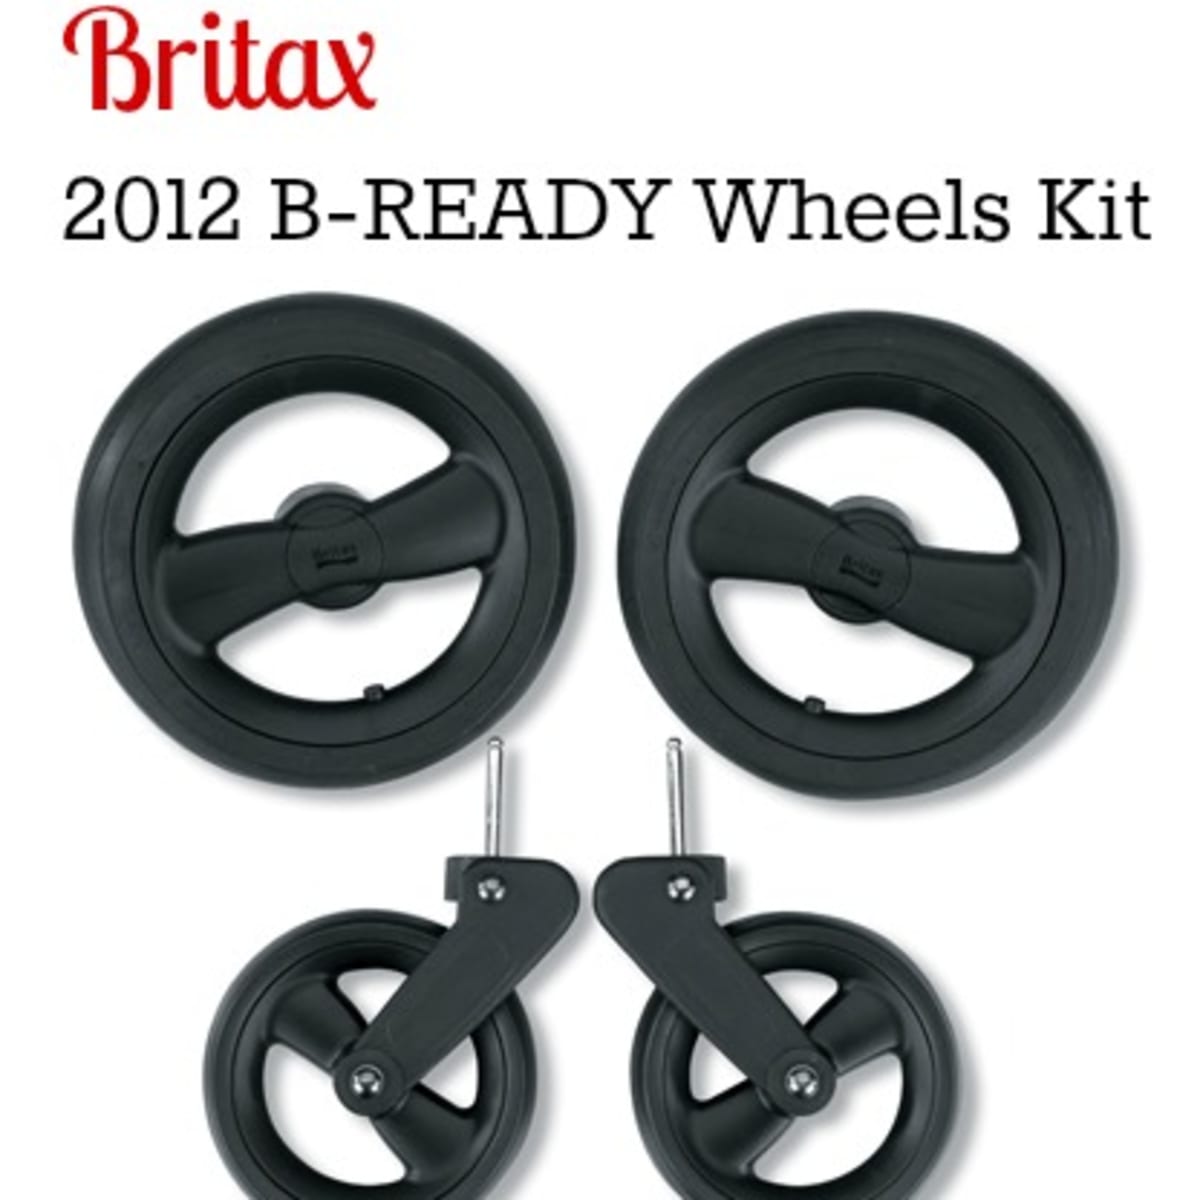 britax stroller replacement wheels